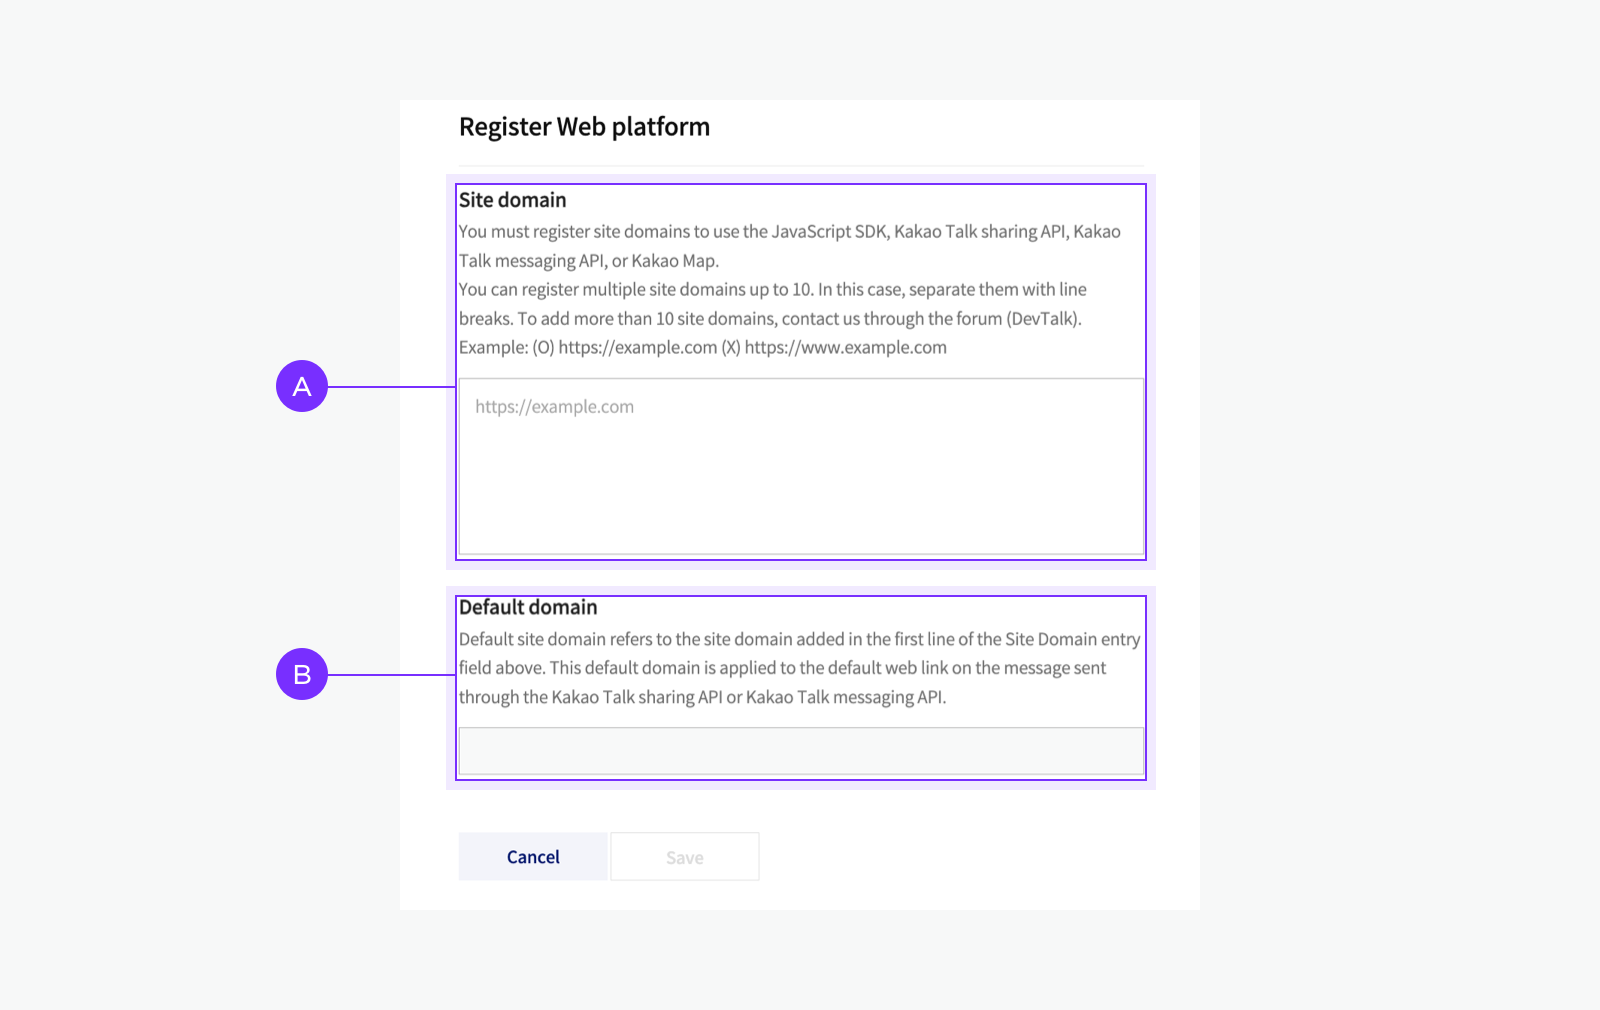 Dialog box for registering Web platform